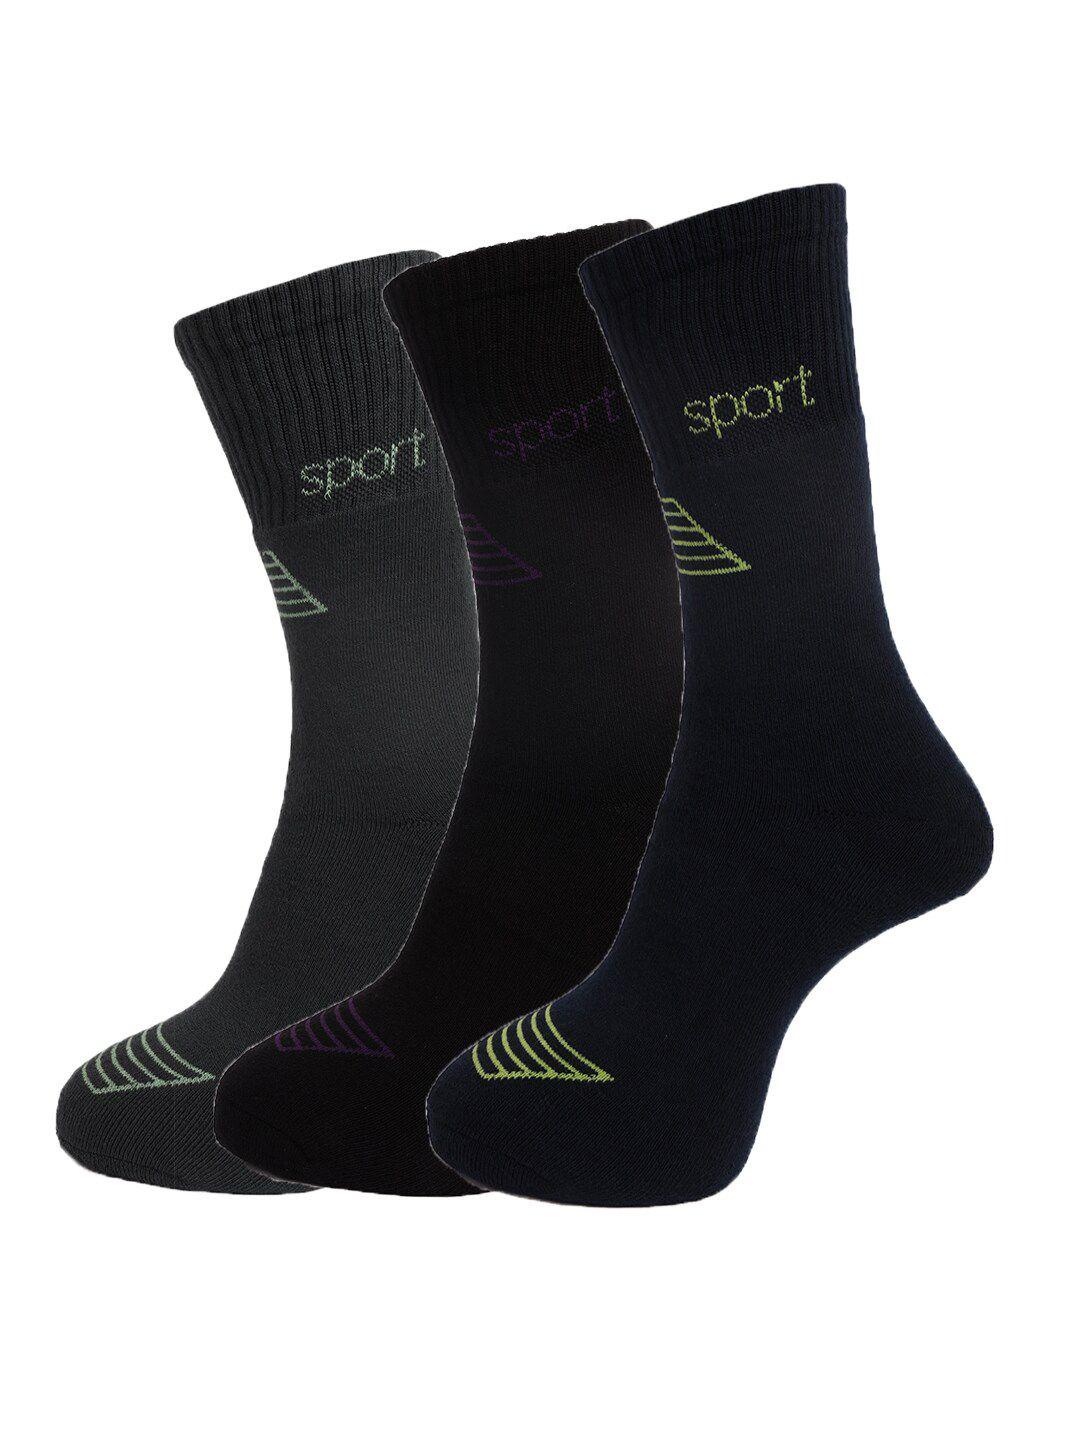 dollar-socks-men-pack-of-3-assorted-above-ankle-cotton-socks